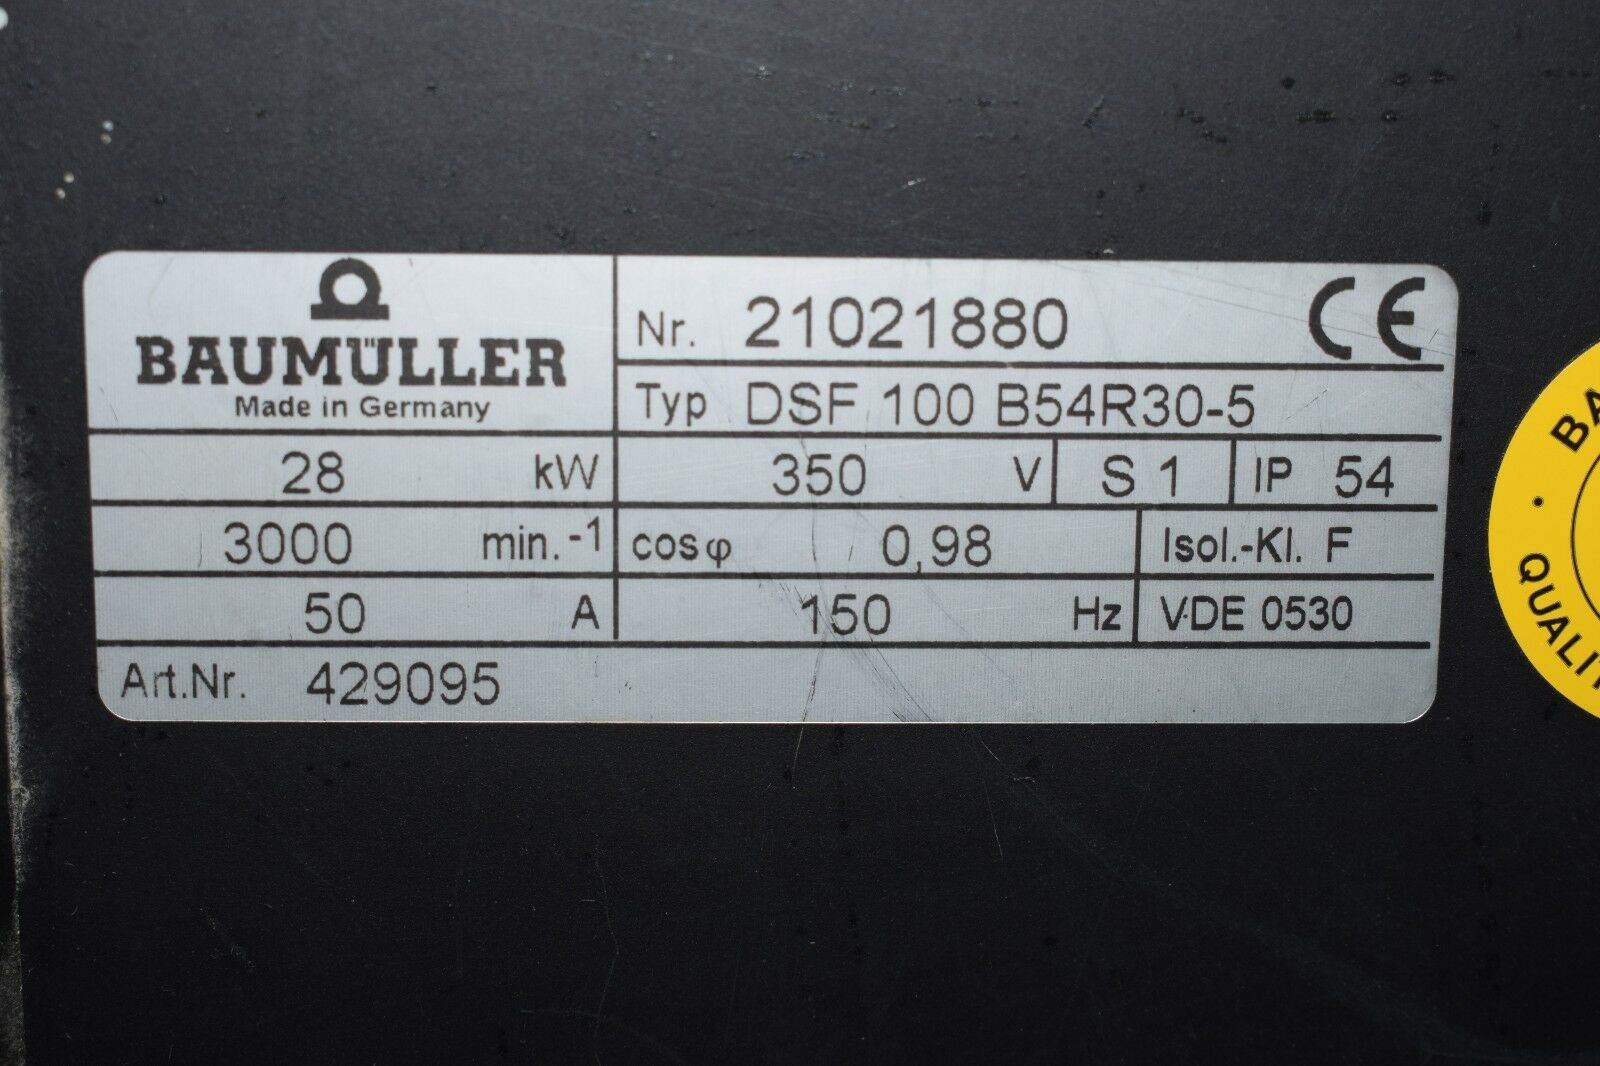 Baumüller DSF 100 B54R30-5 inkl. DF56-2A